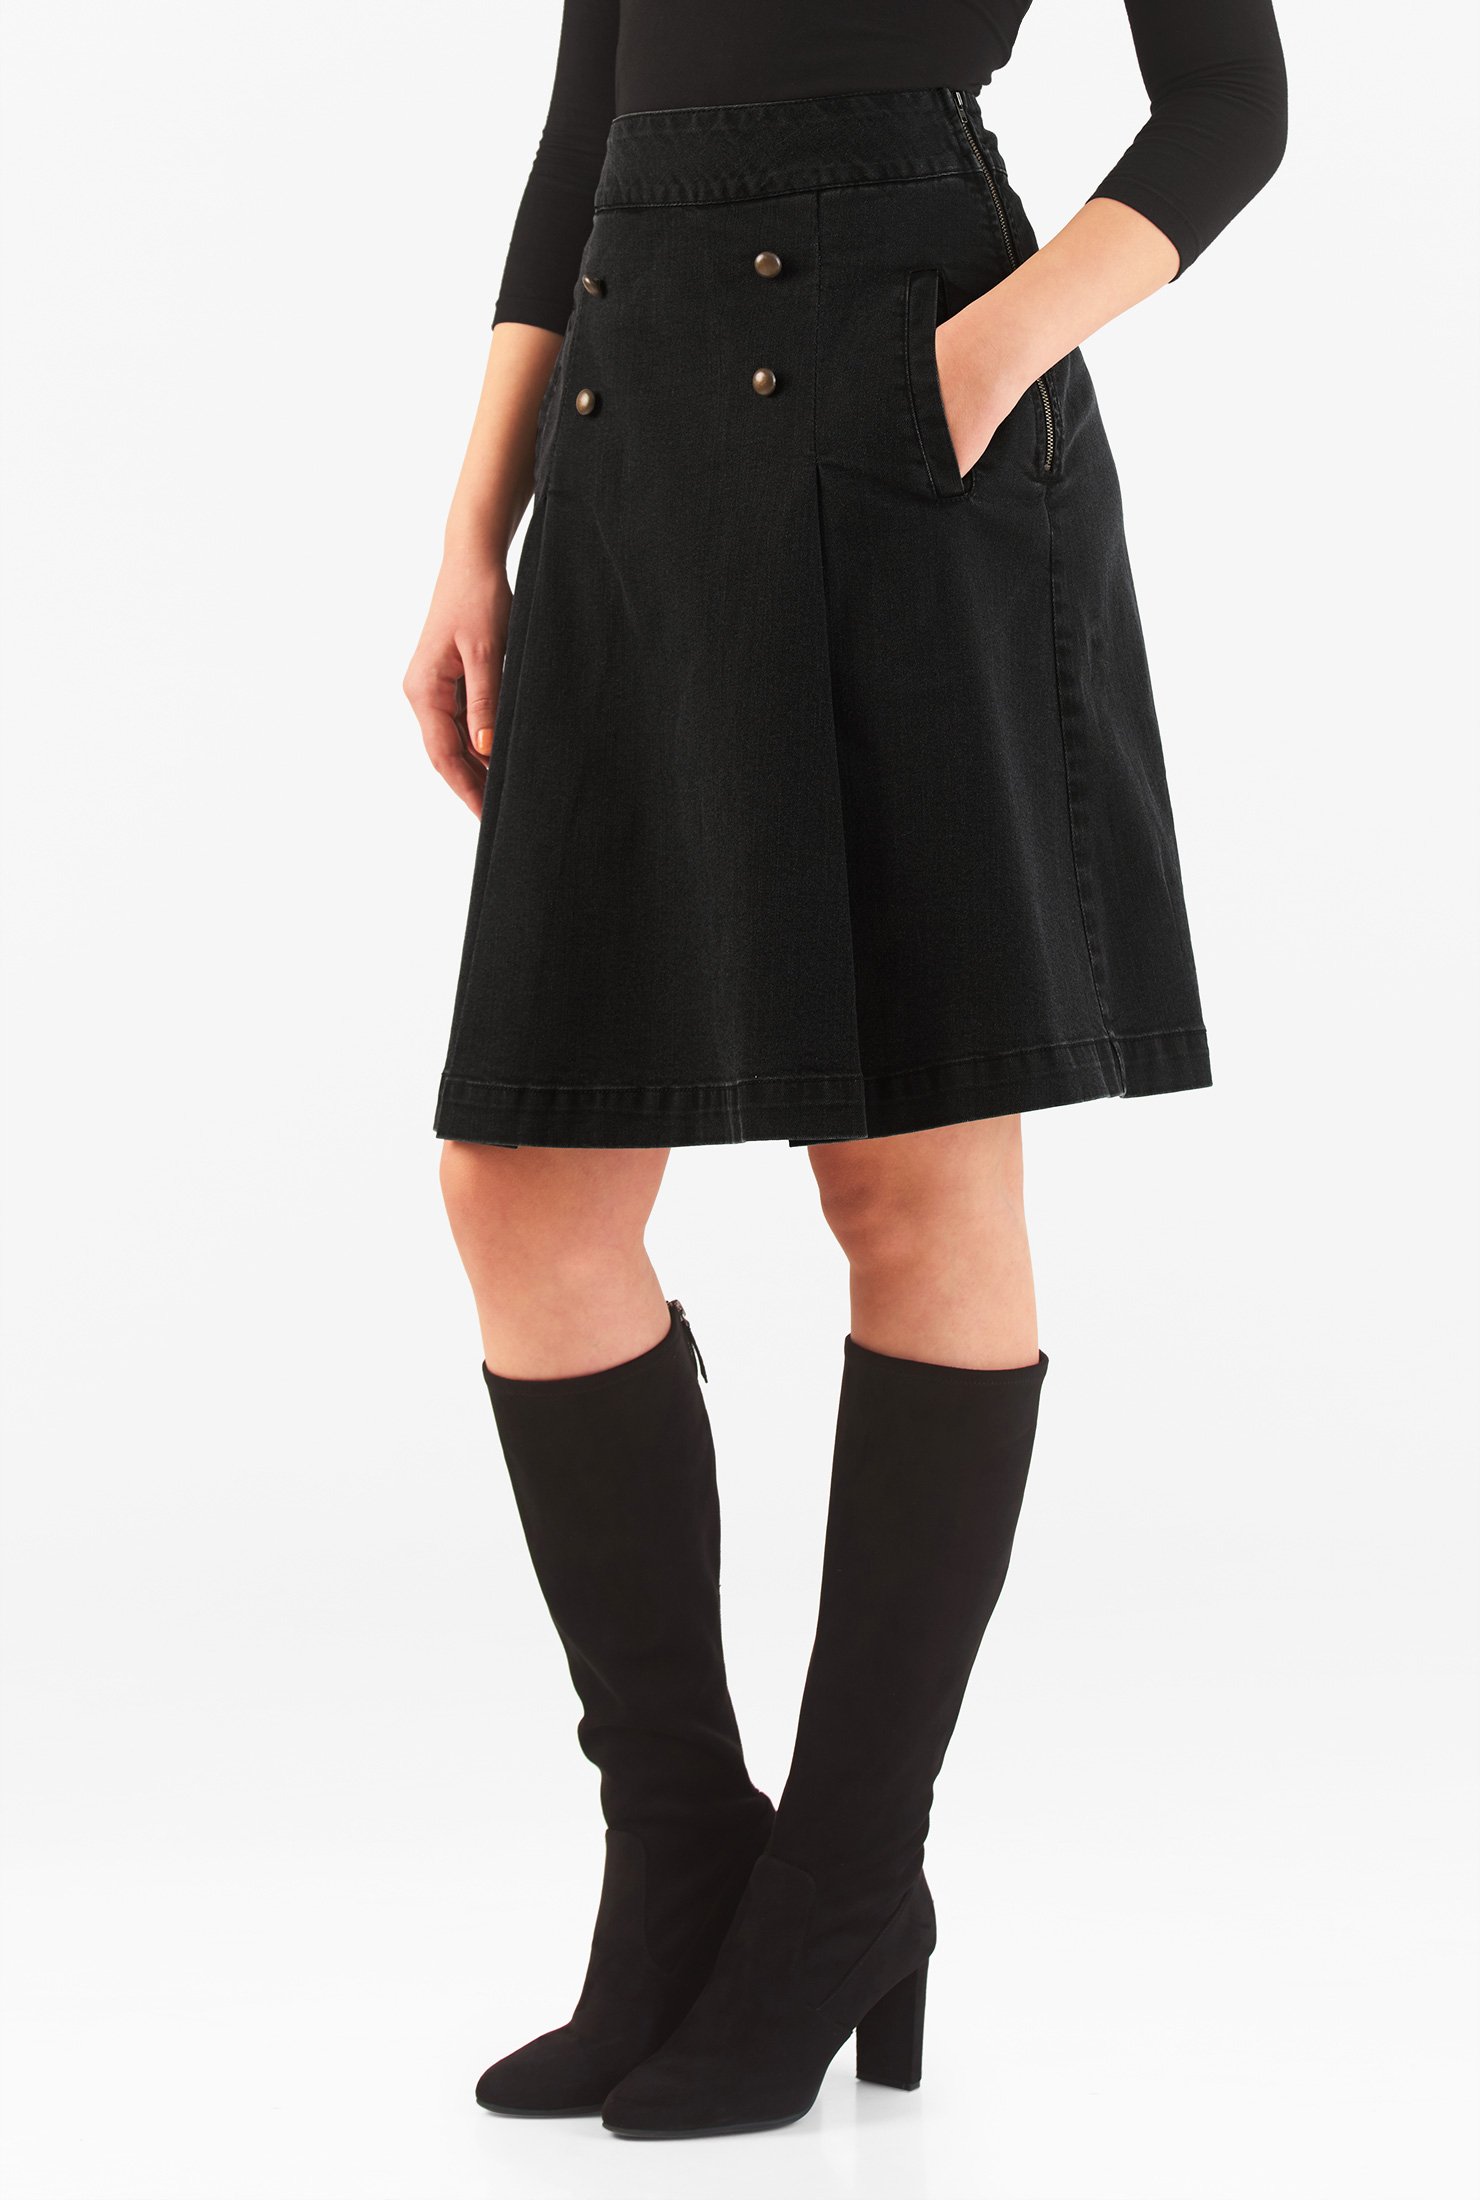 Shop Black denim button pleat skirt | eShakti